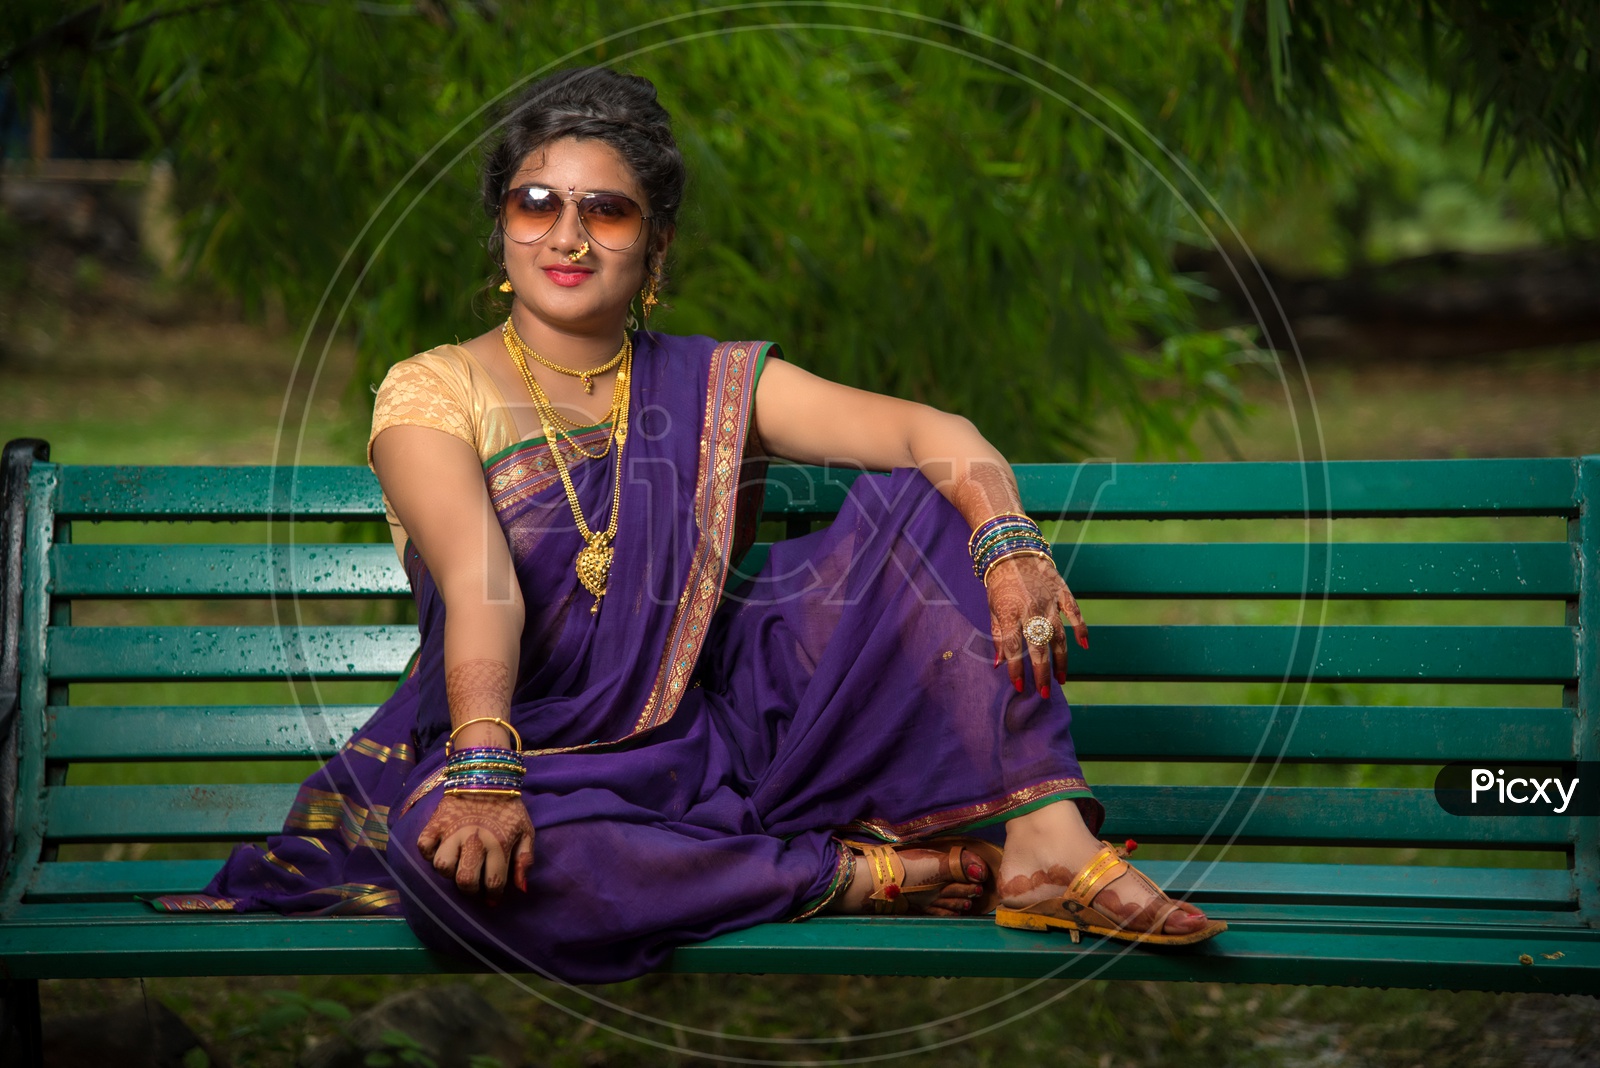 Traditional South Indian saree portrait : r/portraitphotos